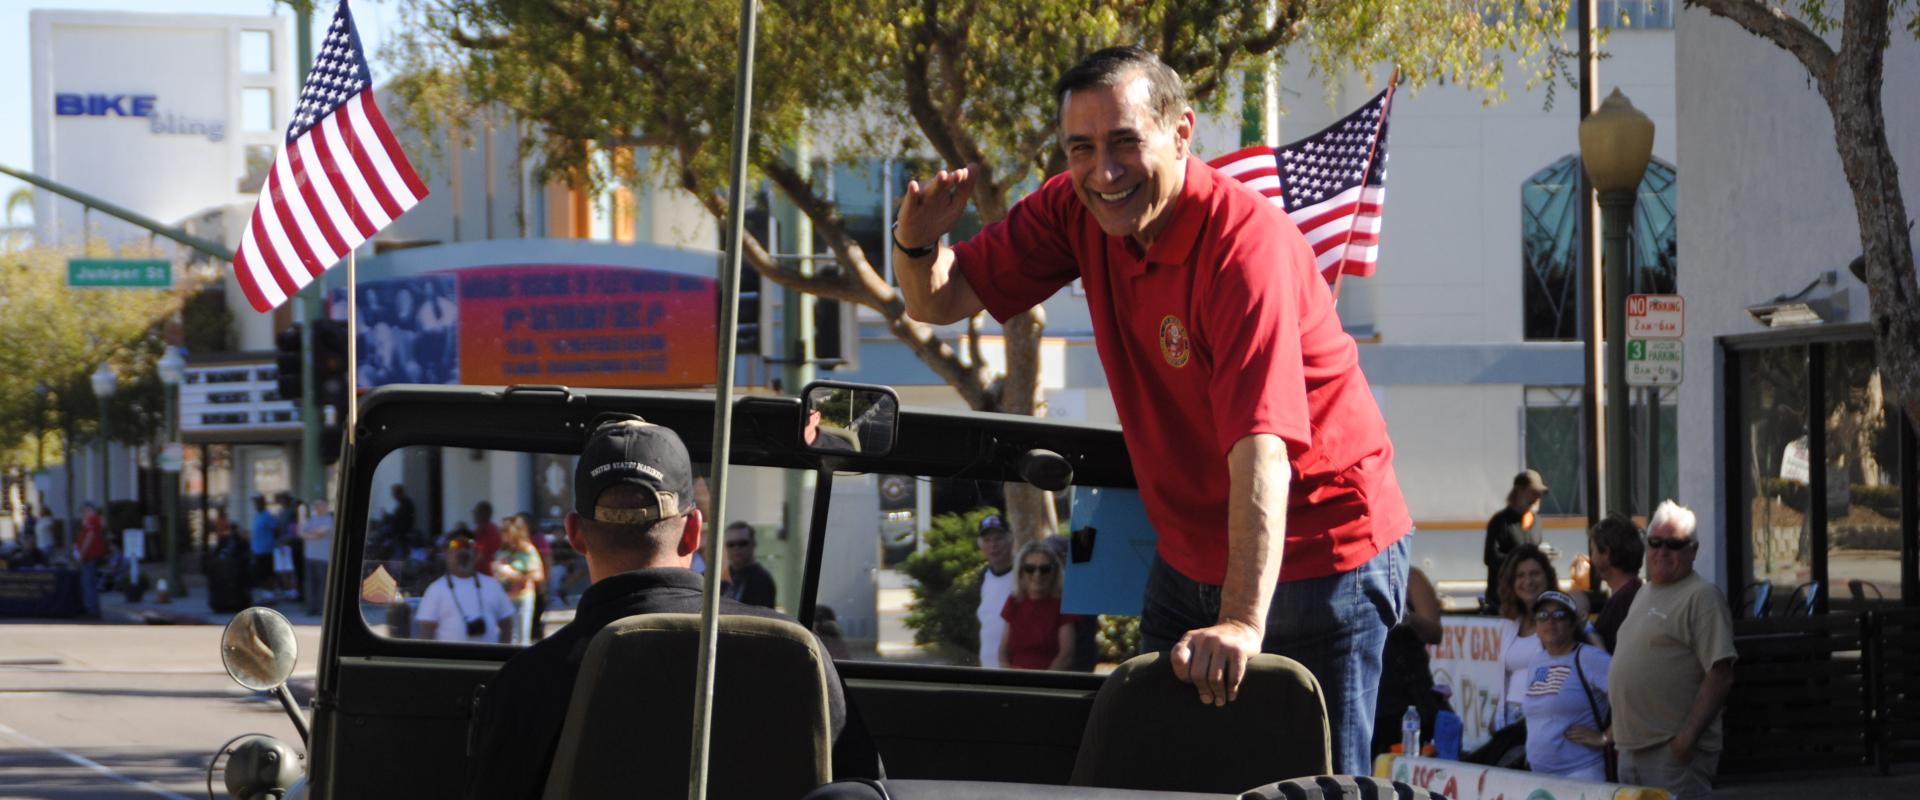 Congressman on a jeep in a parade.